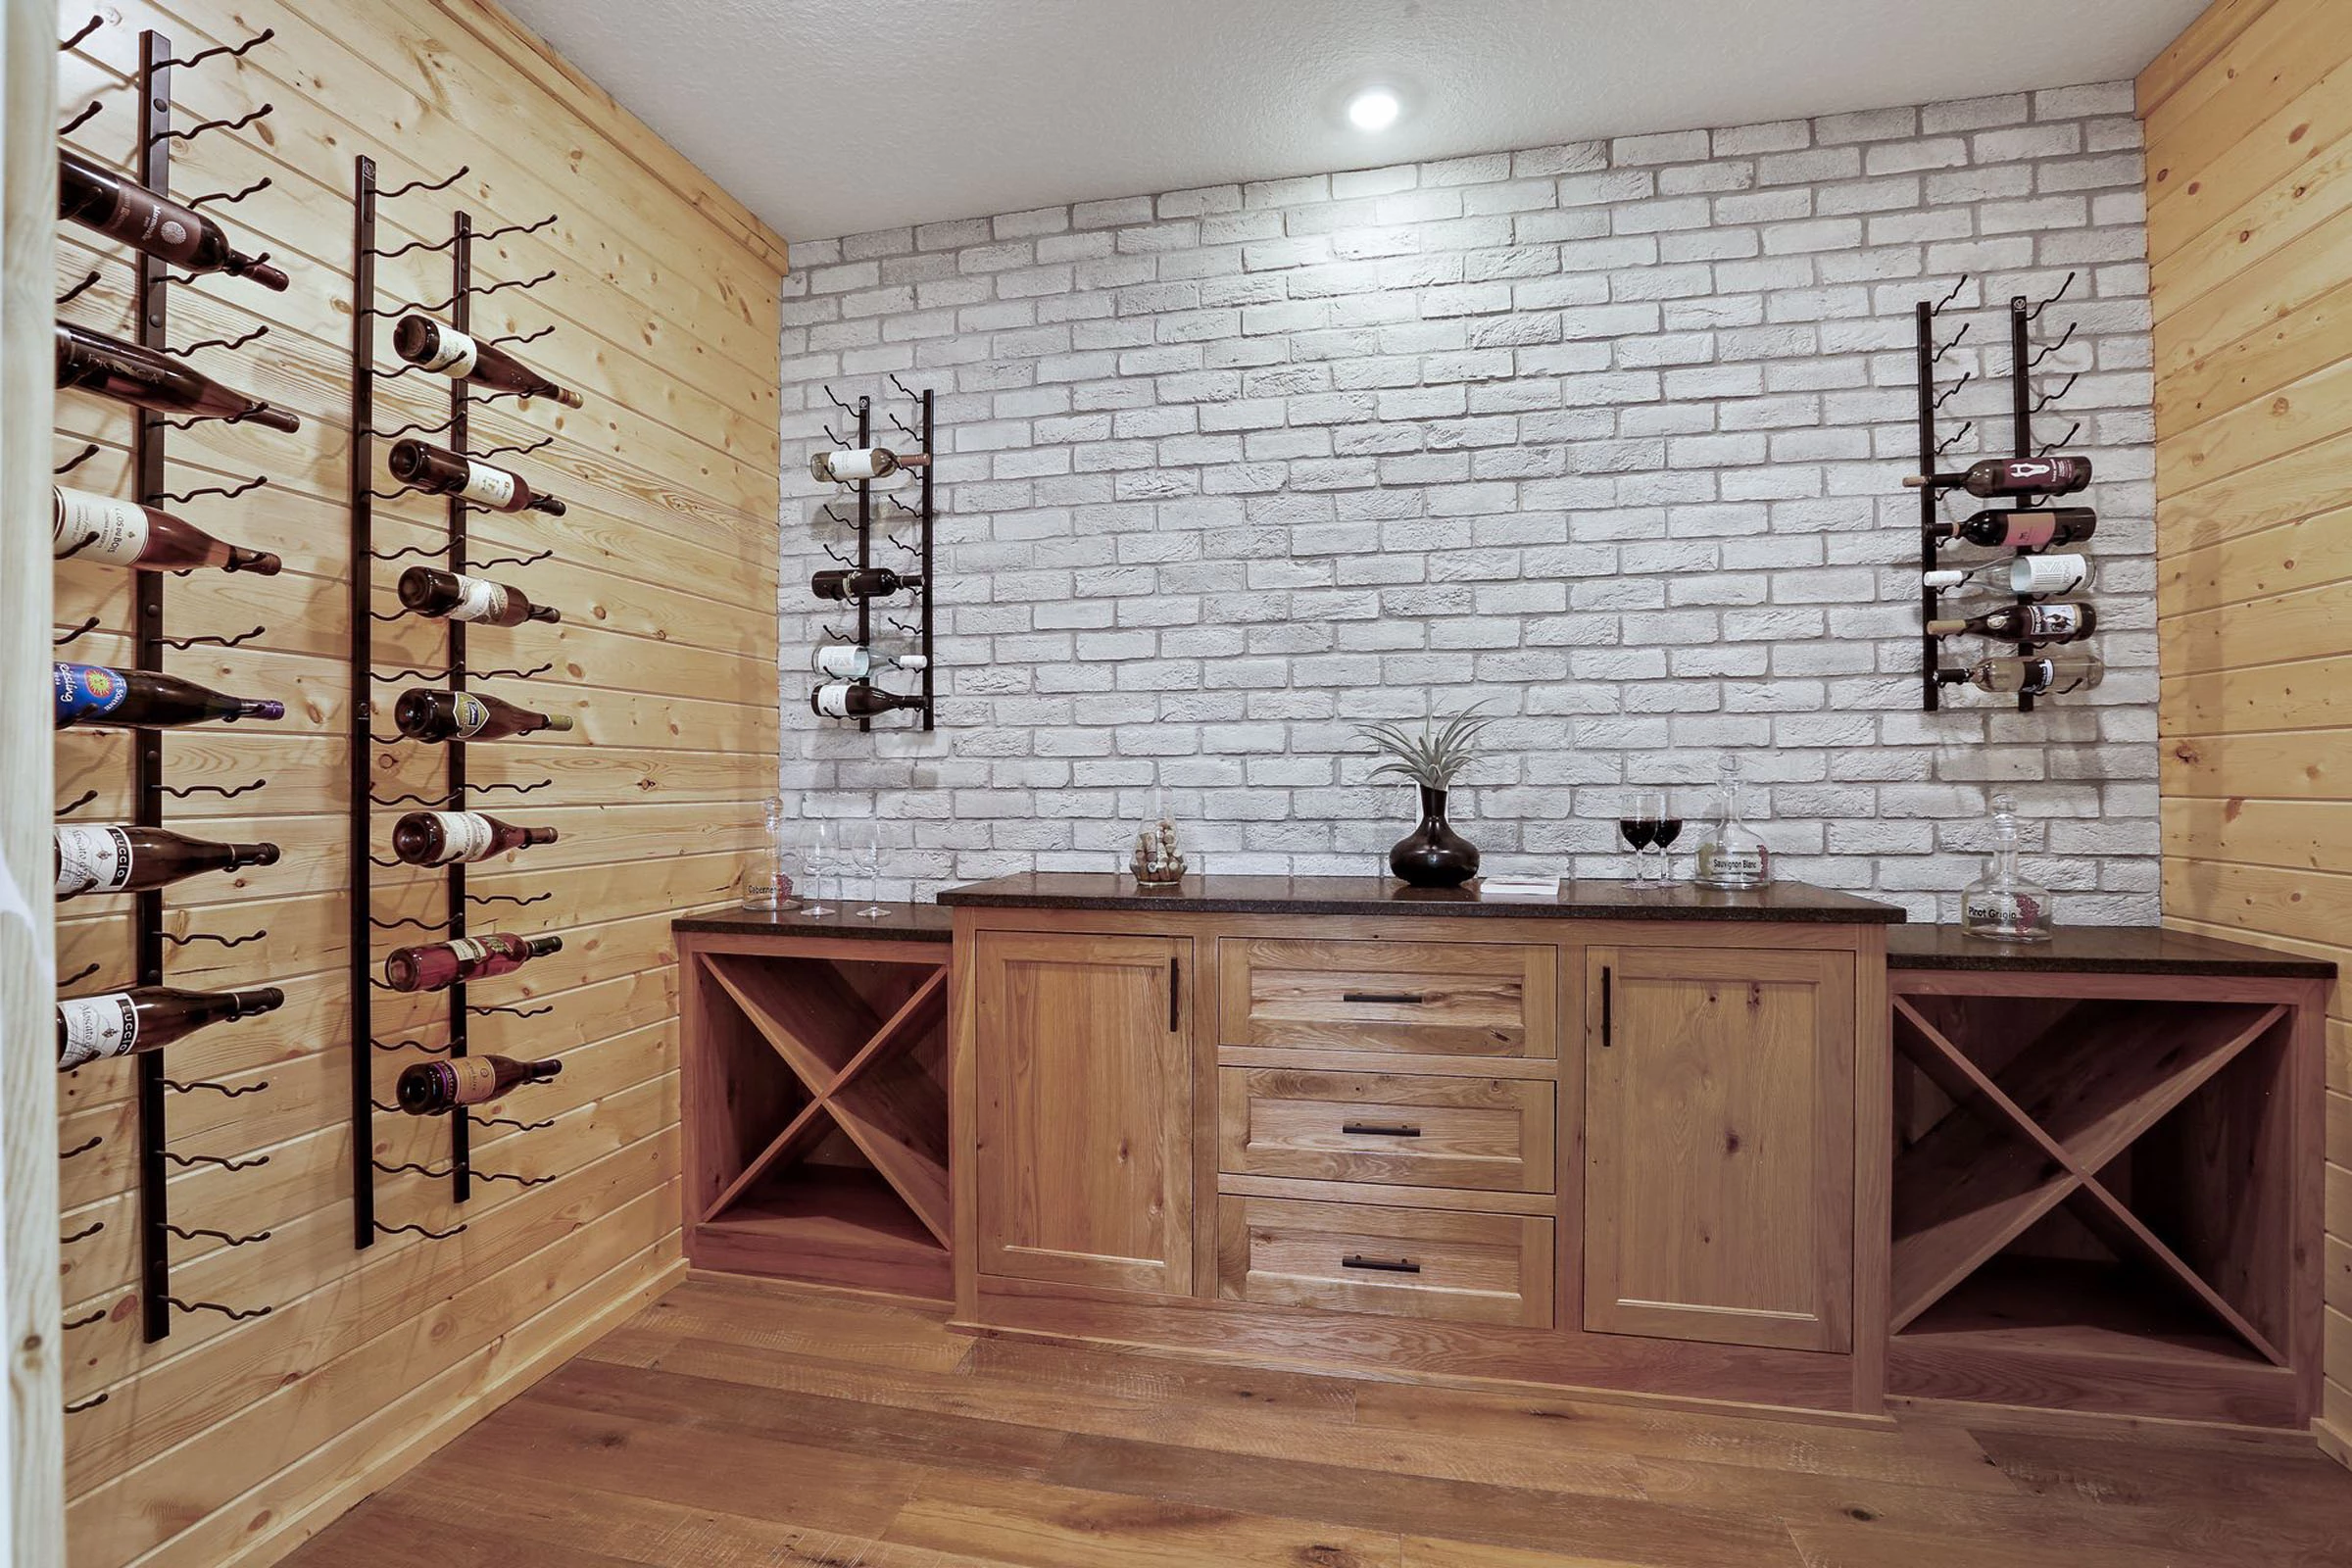 Walk-in wine room with custom shelving